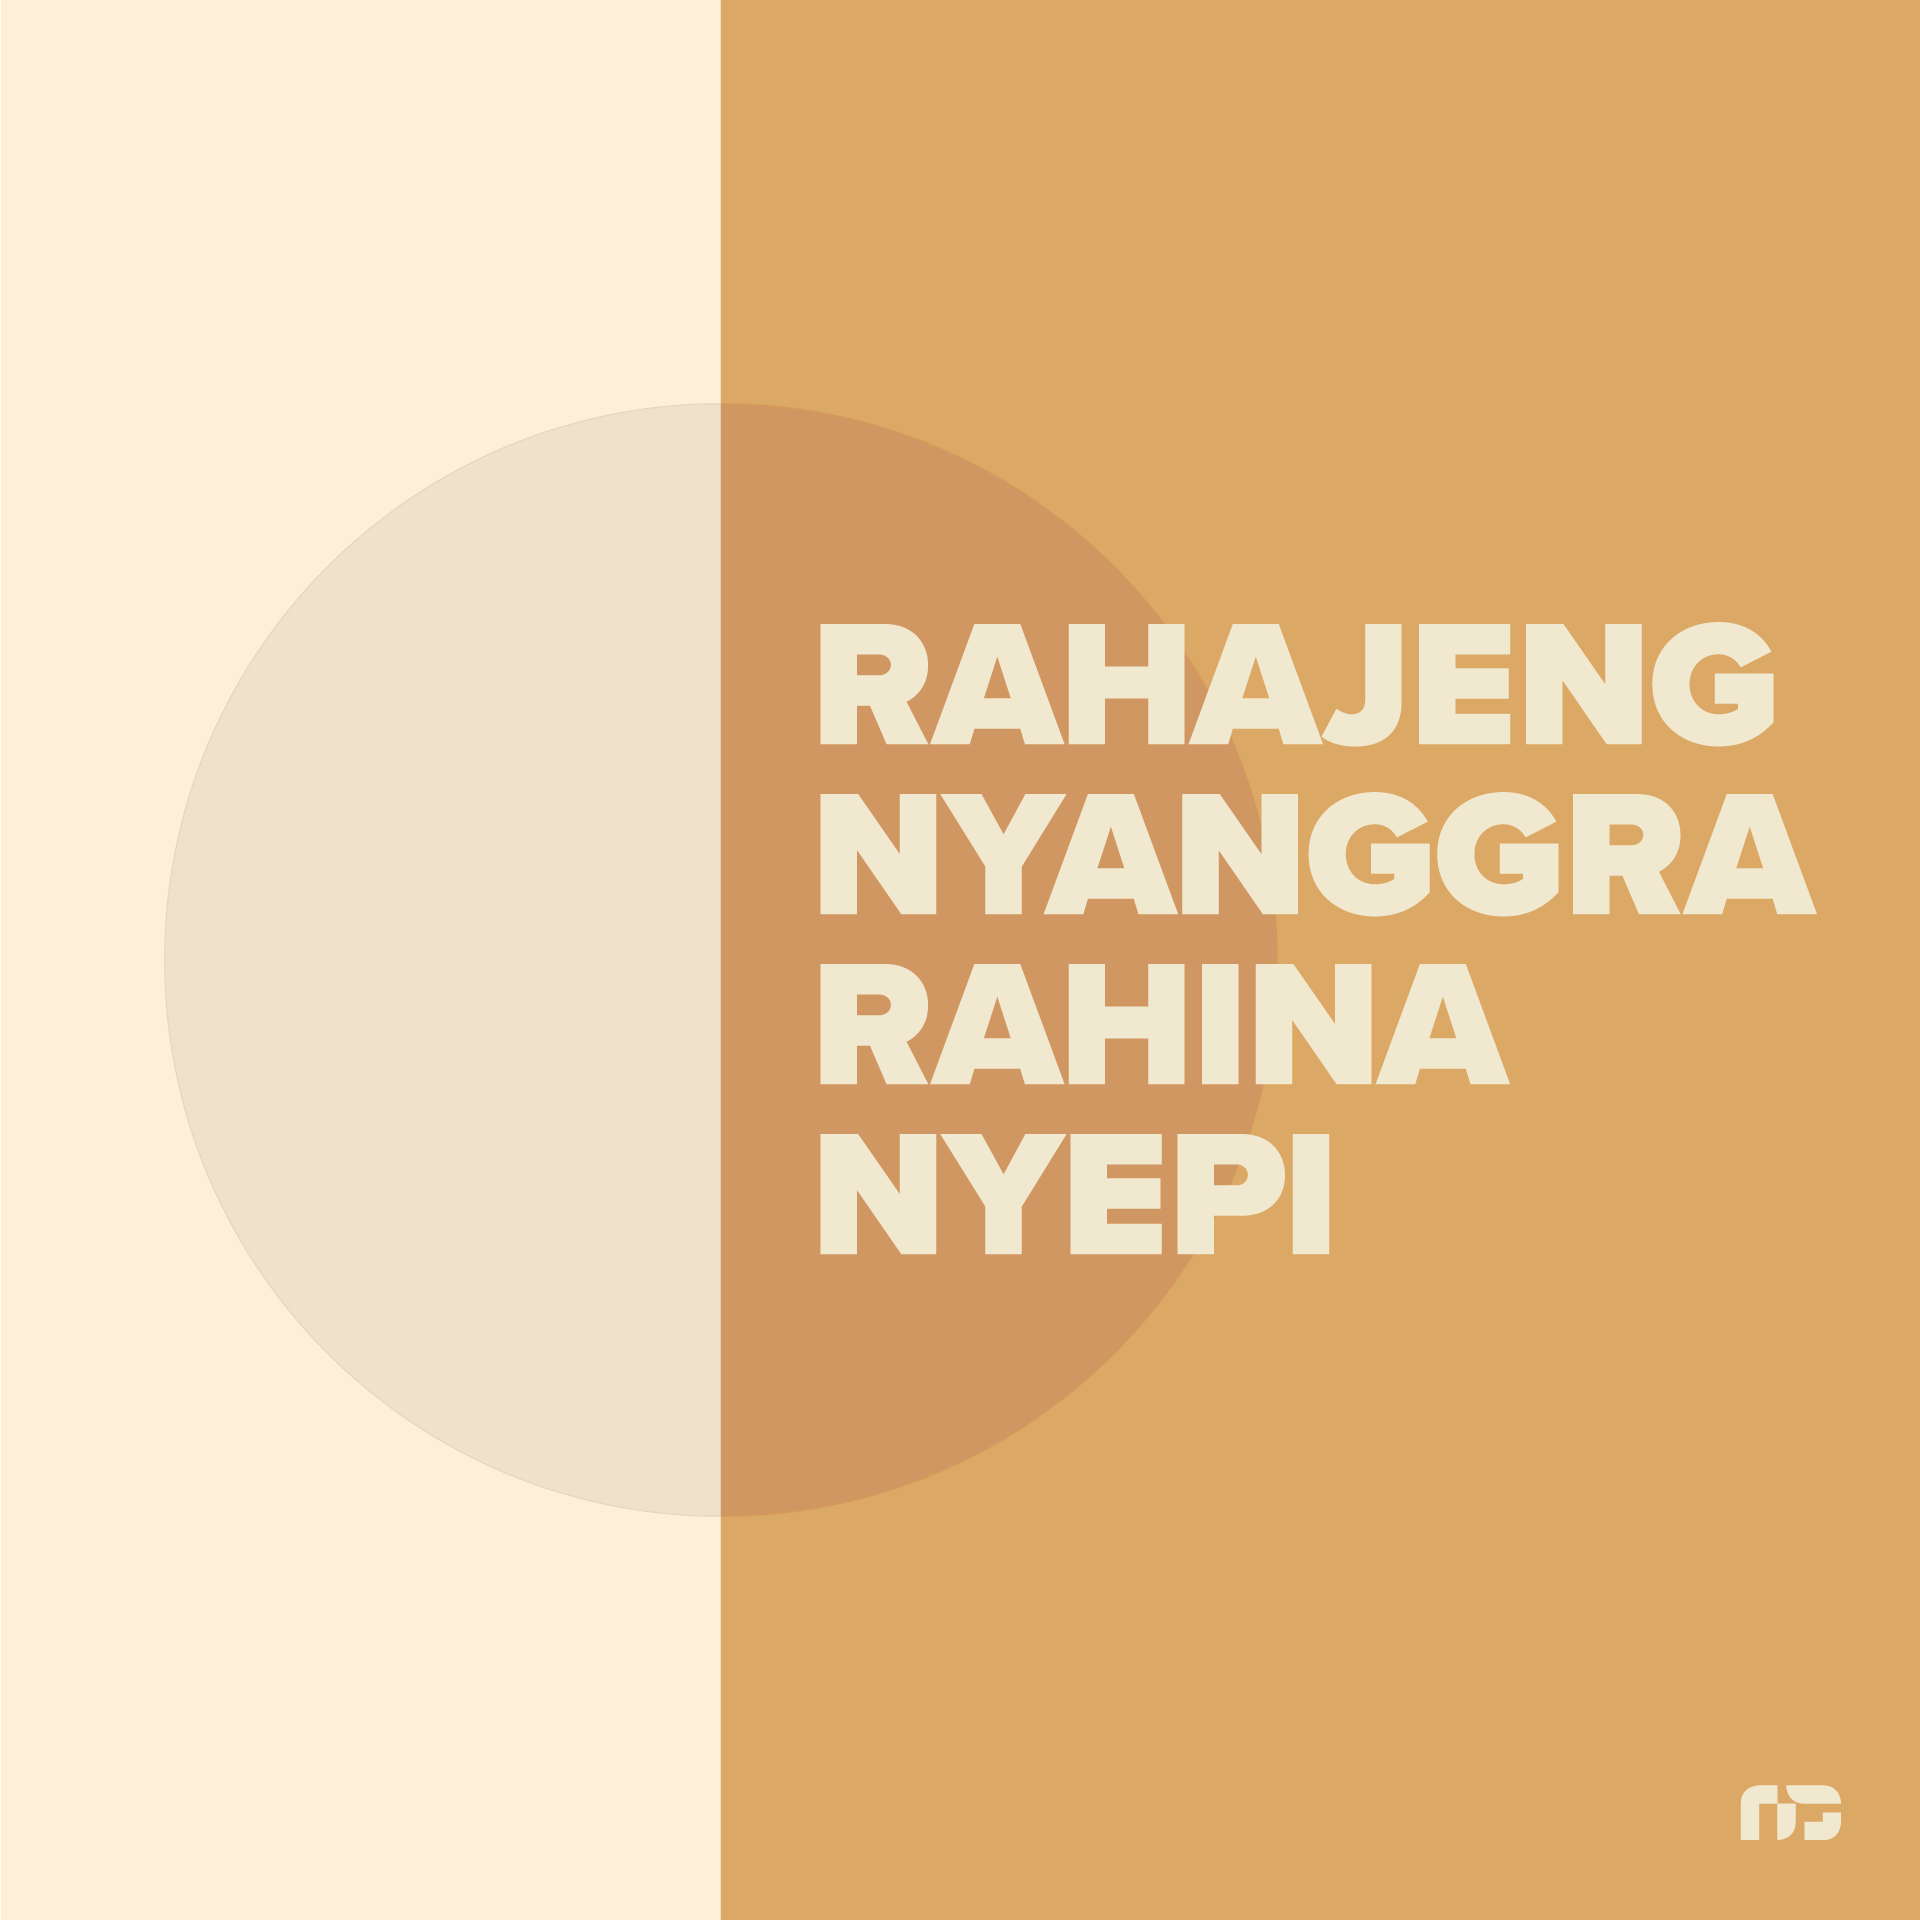 Rahajeng Nyanggra Rahina Nyepi